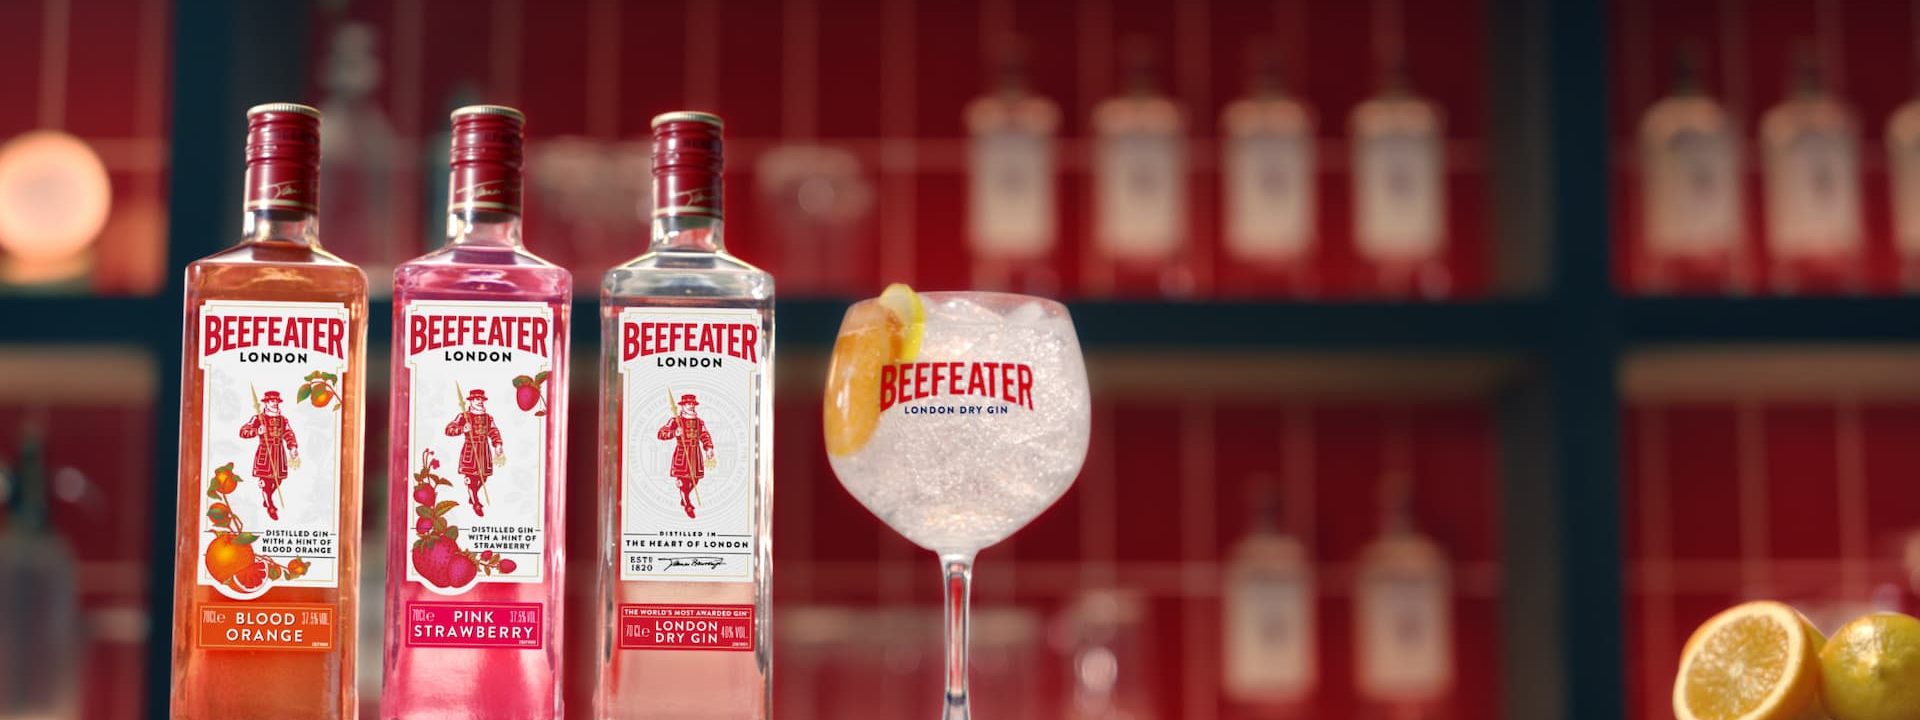 beefeater gin orange pink london dry bottles aspect ratio 16 6